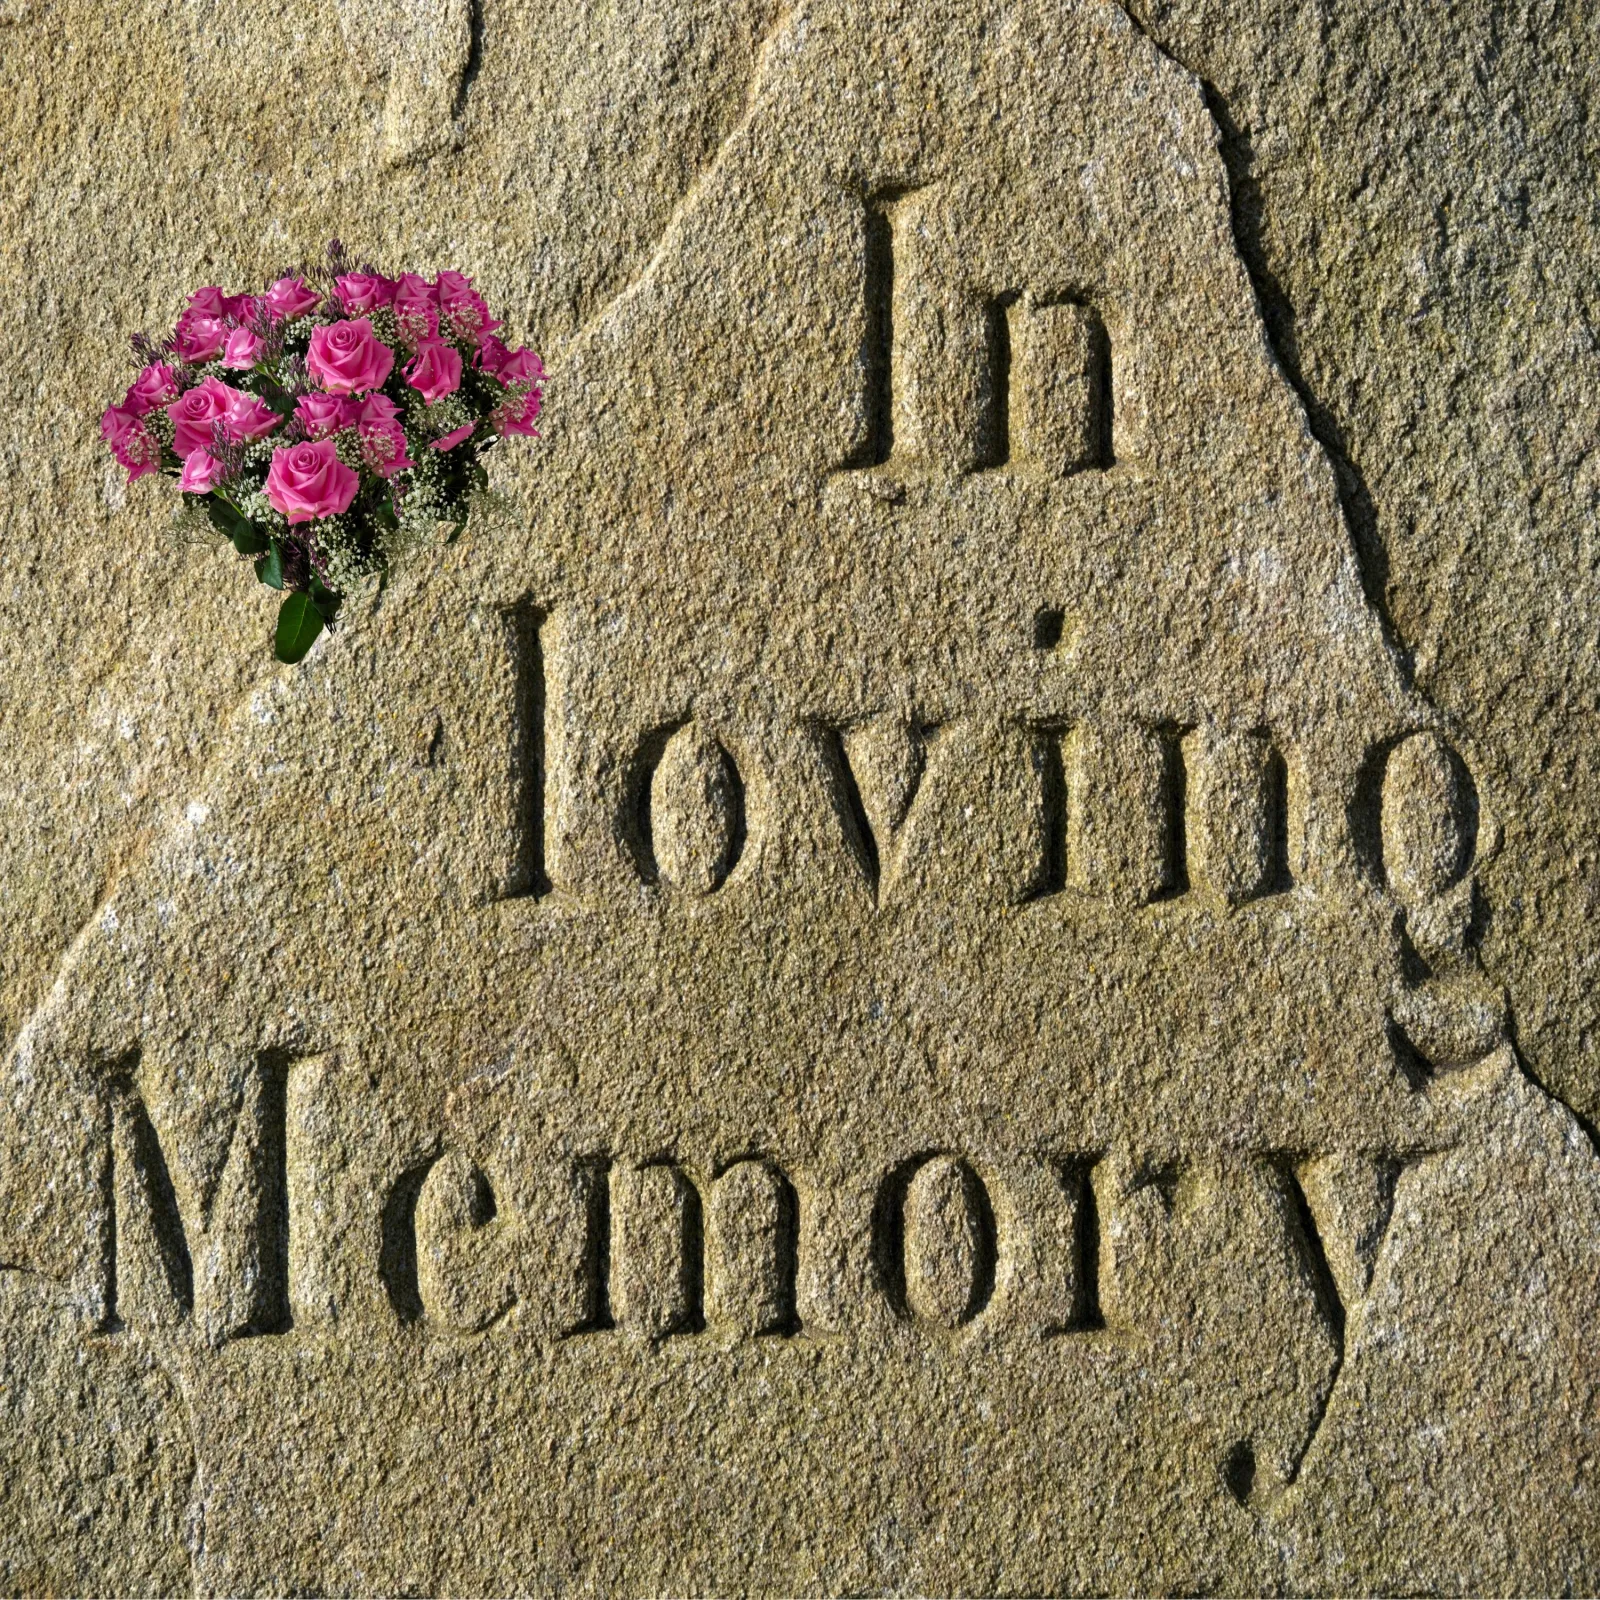 In loving memory engraved on grave stone